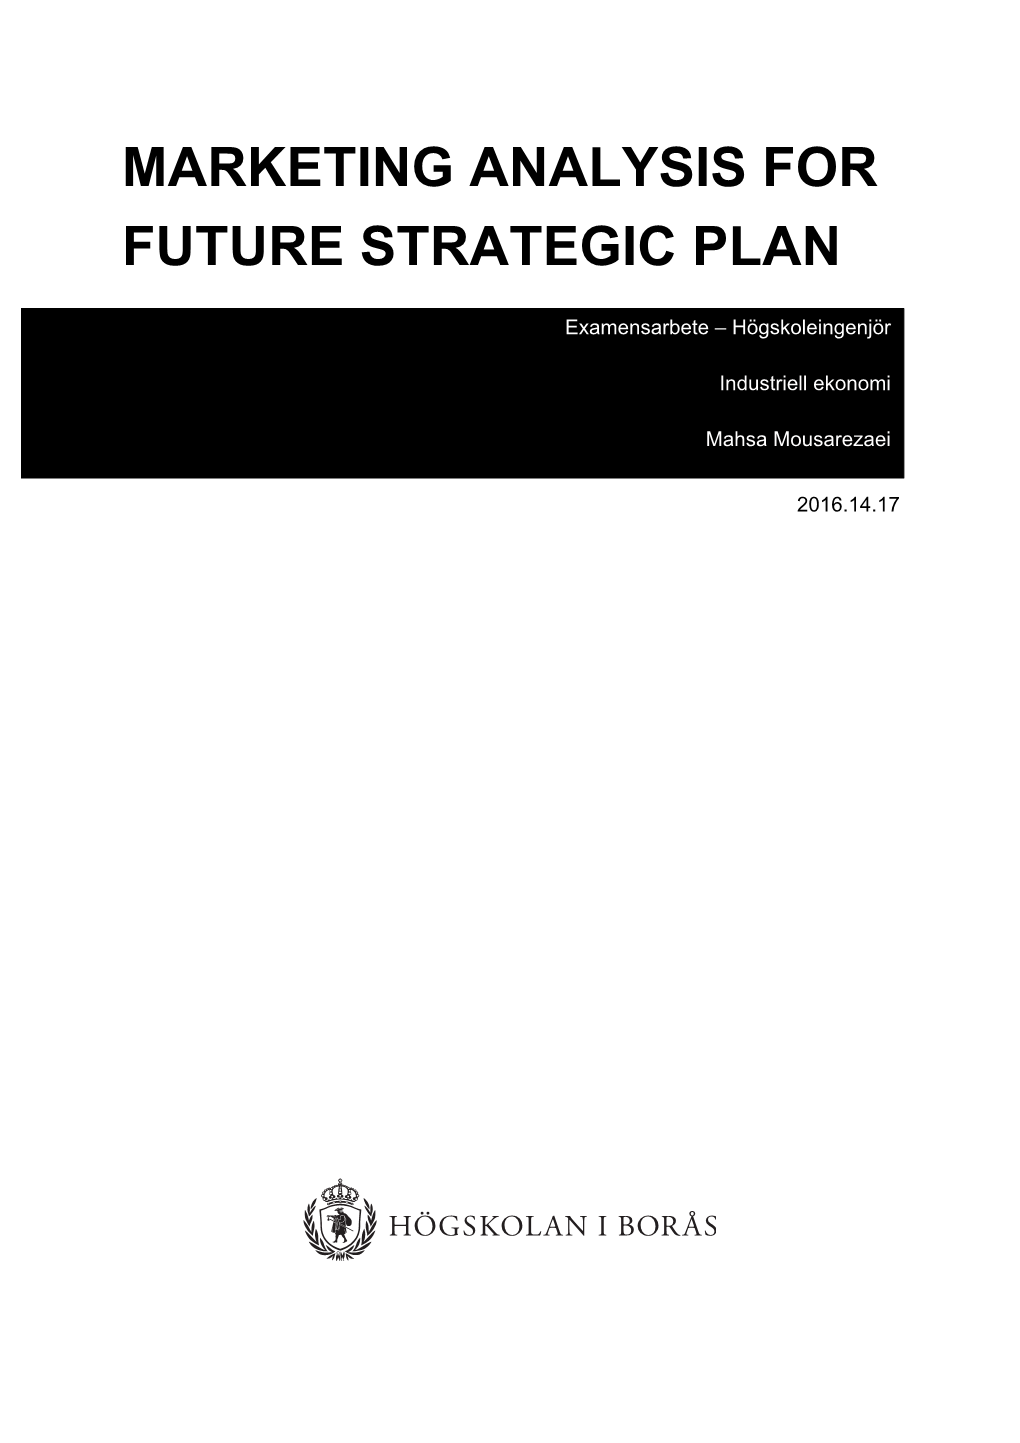 Marketing Analysis for Future Strategic Plan